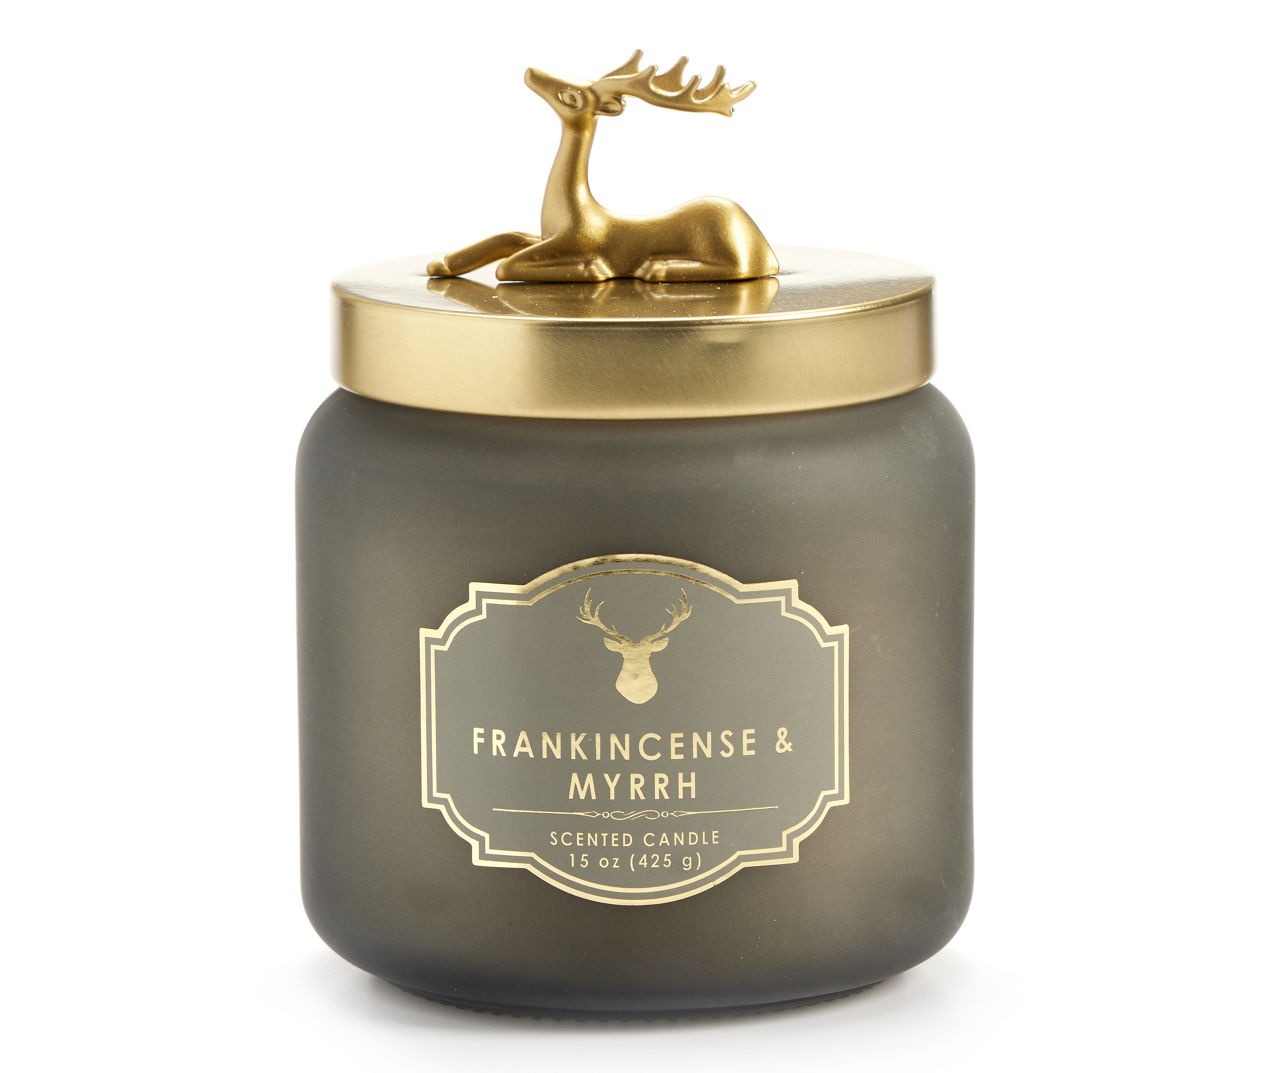 Frankincense & Myrrh Reindeer Lid Frosted Glass Candle, 15 Oz.